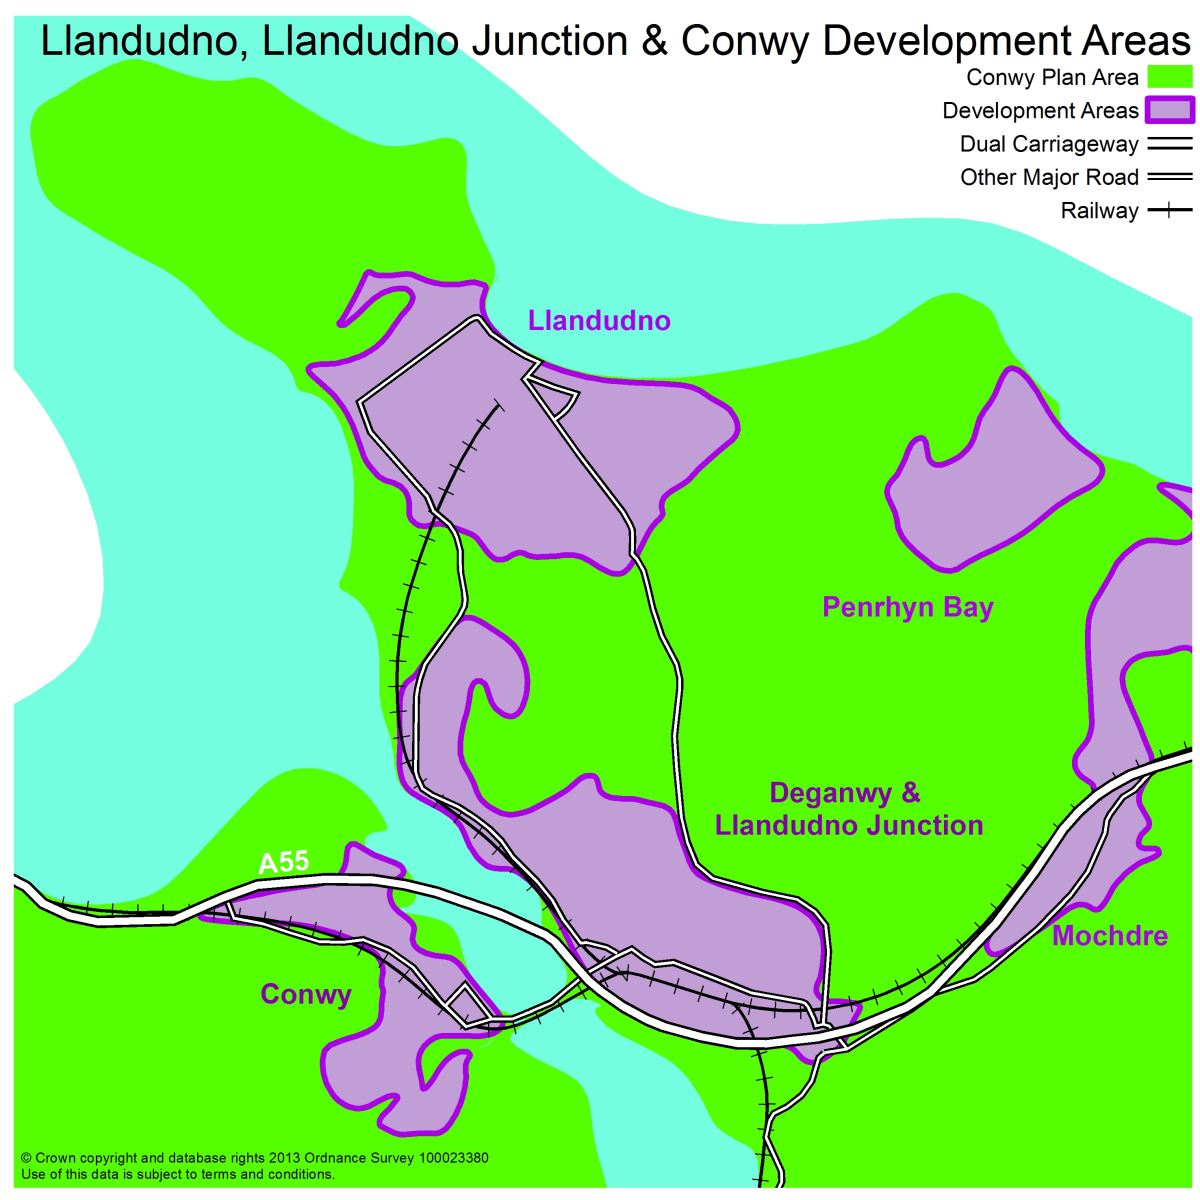 Llandudno, Llandudno Junction and Conwy Development Areas